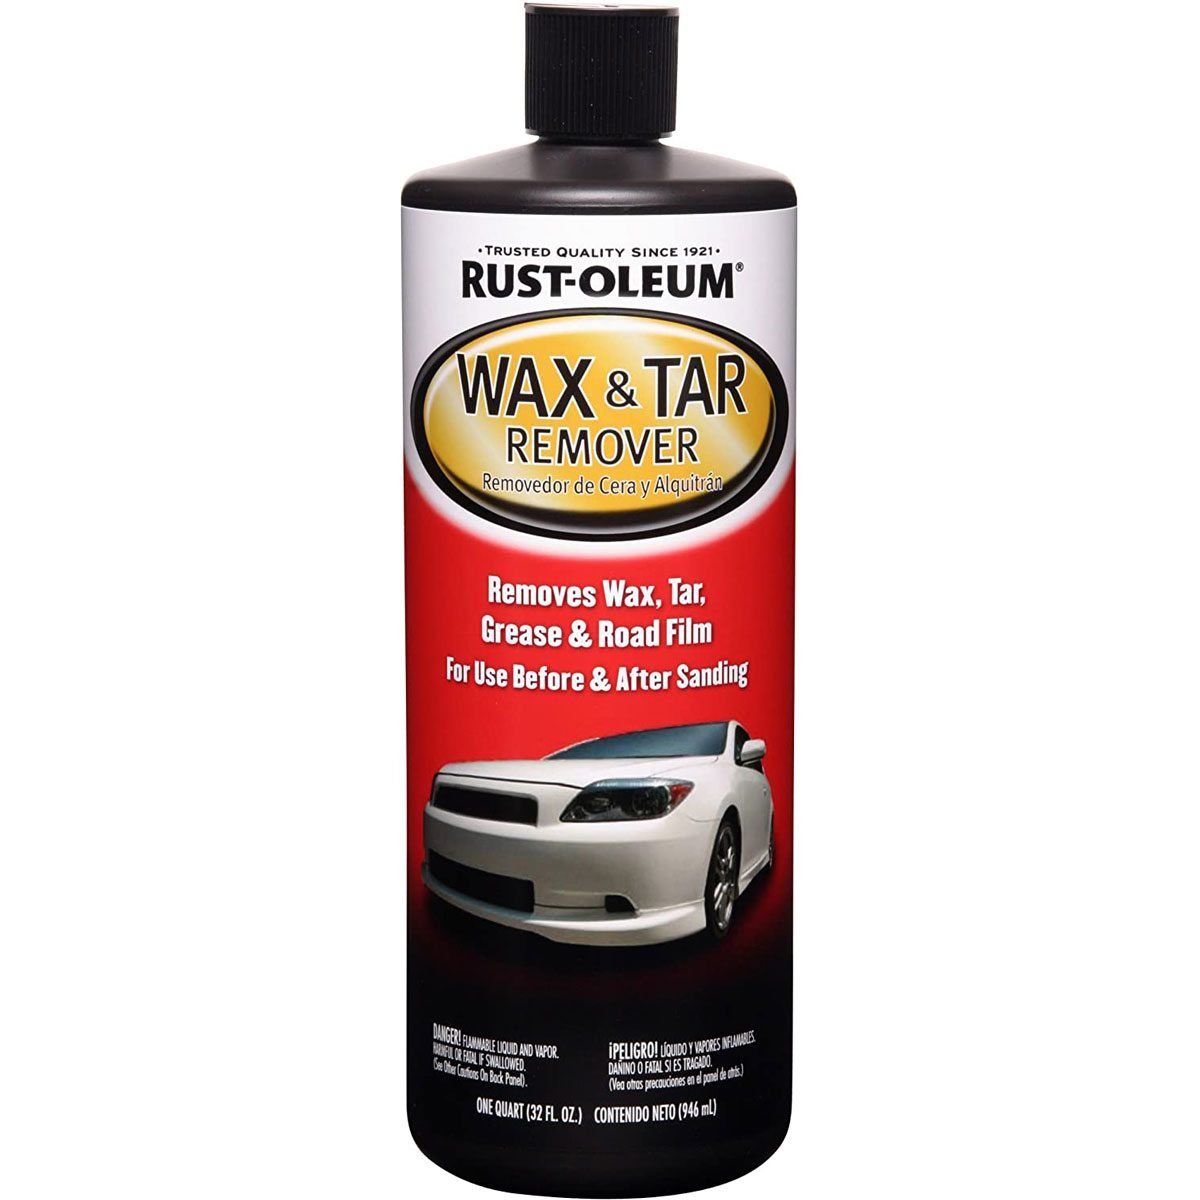 Best Car Wax Spray - Top Car Wax Reviews 